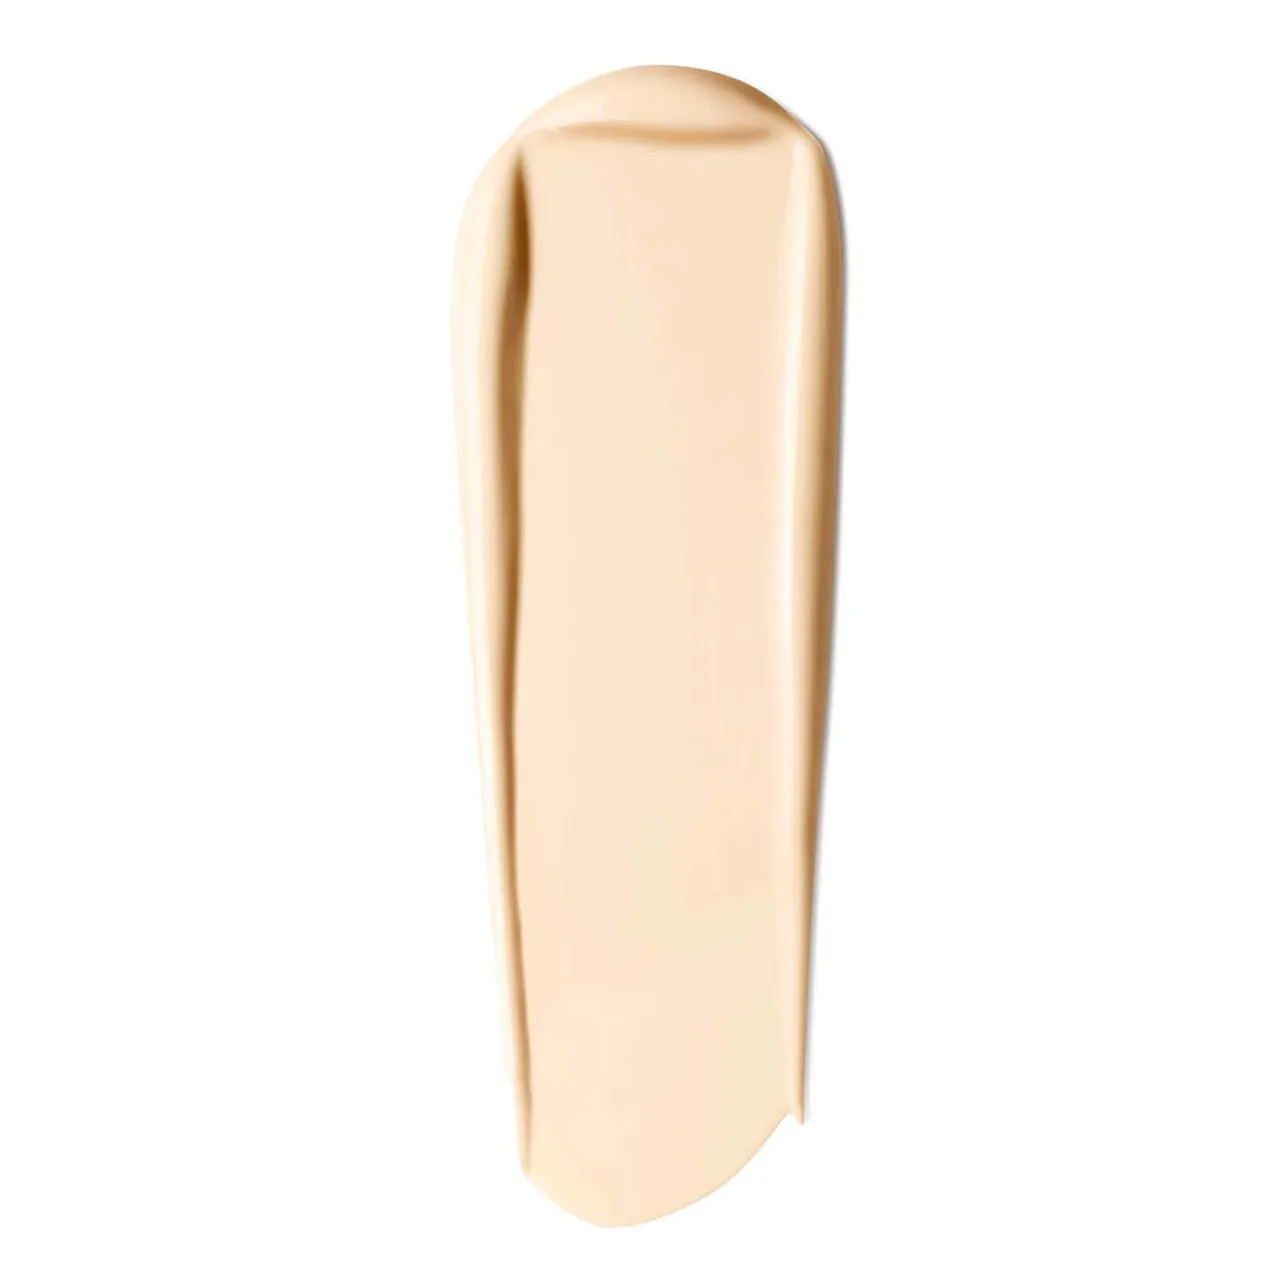 Guerlain Parure Gold Skin 24H No-Transfer High Perfection Foundation 35ml (Various Shades) - 0.5W Warm / Doré